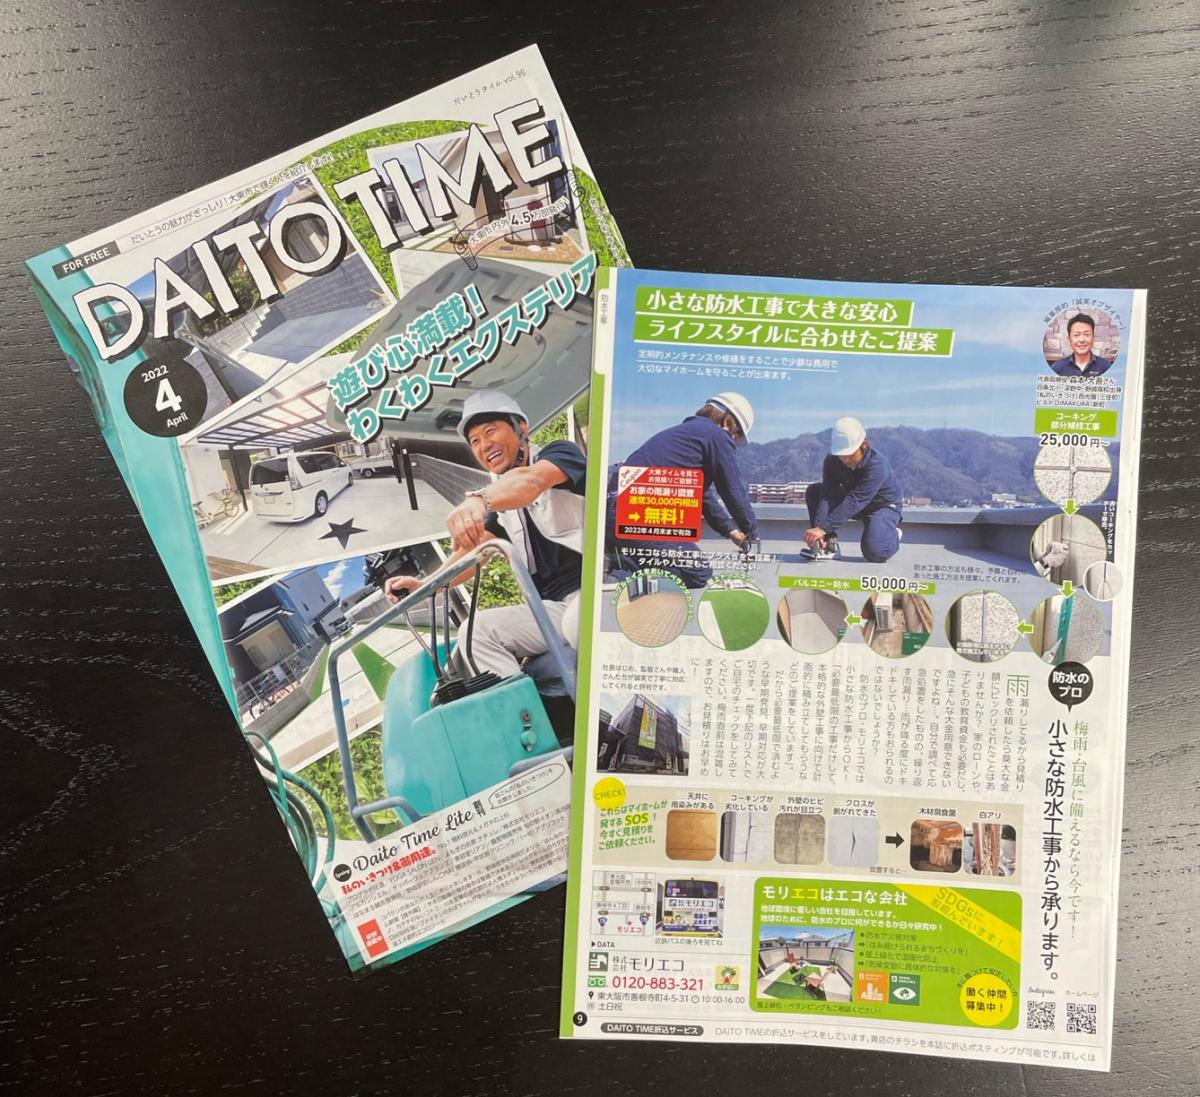 「DAITO TIME」4月号に掲載されています！